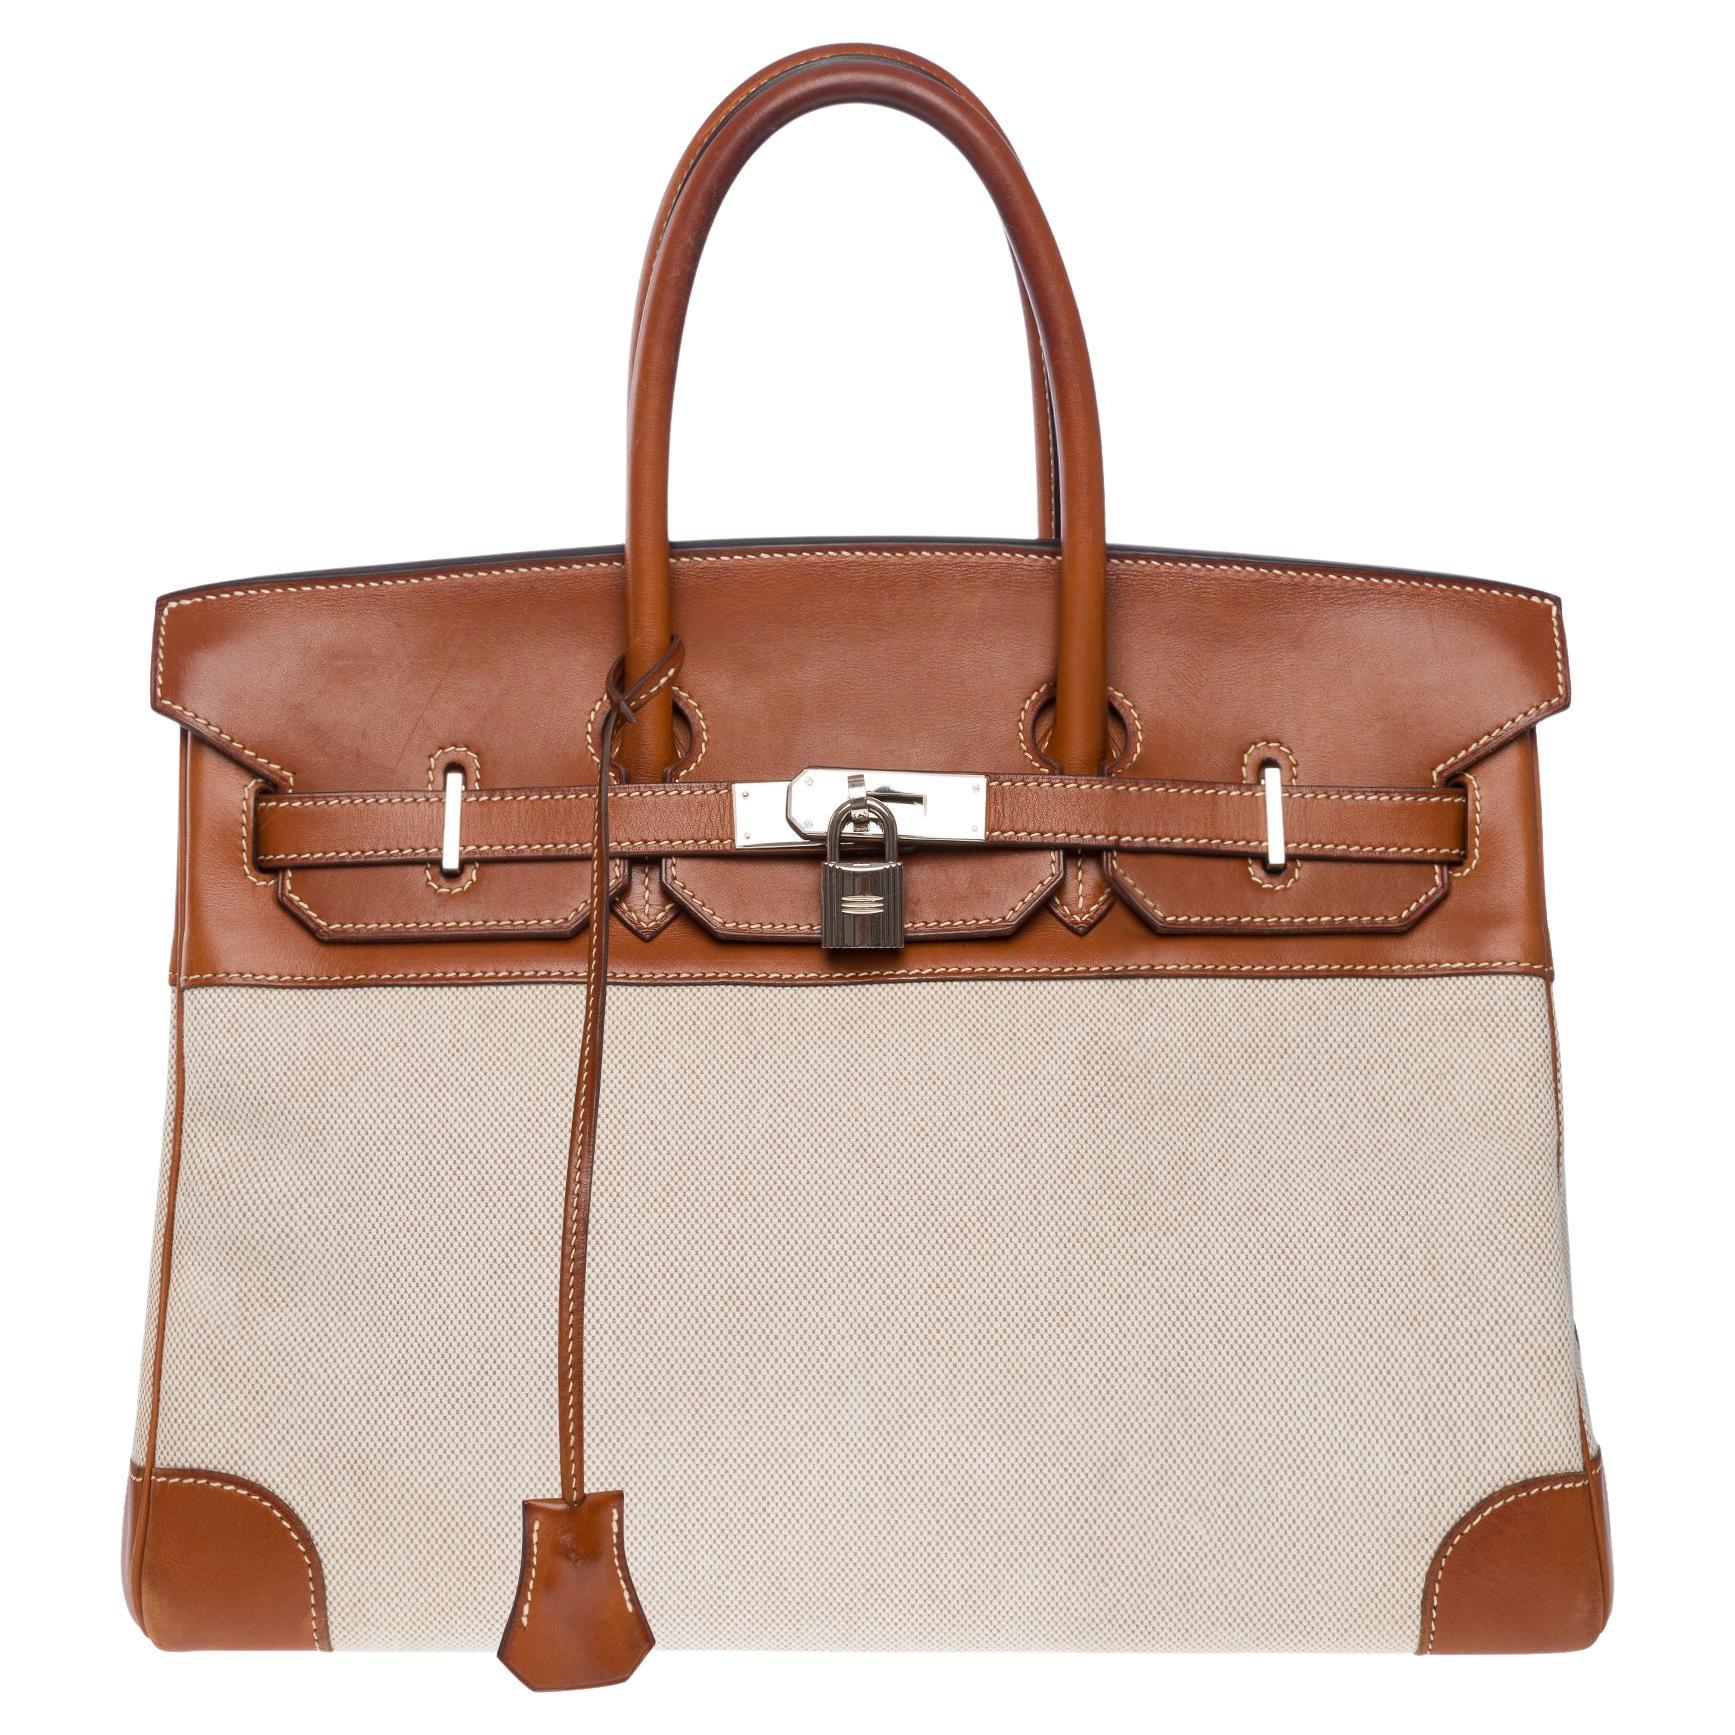 Fantastique sac à main Hermès Birkin 35 en cuir Barénia marron et toile Brown, SHW